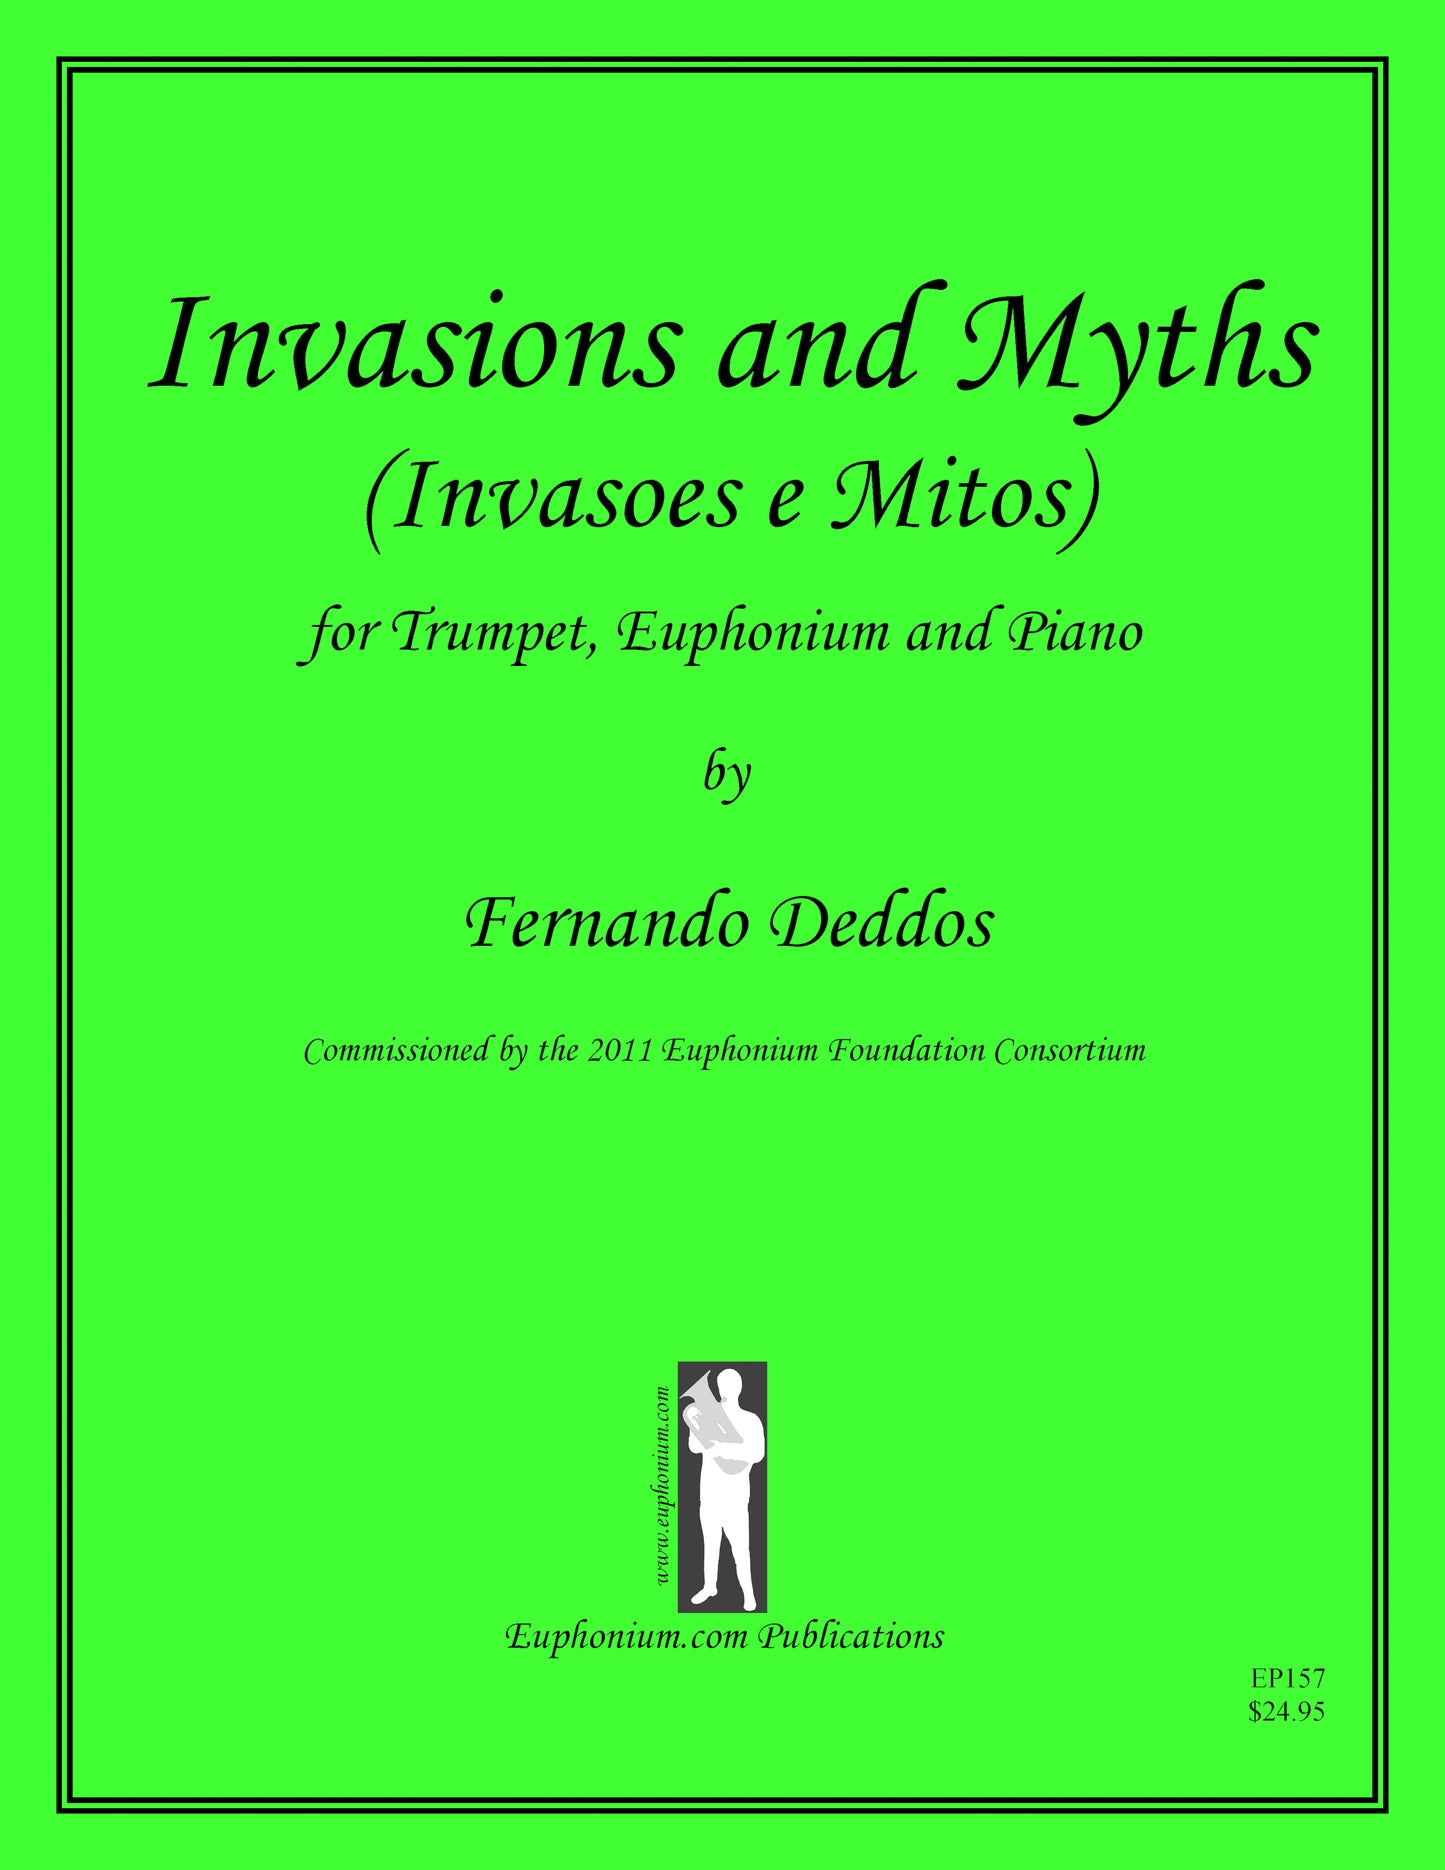 Deddos - Invasions and Myths